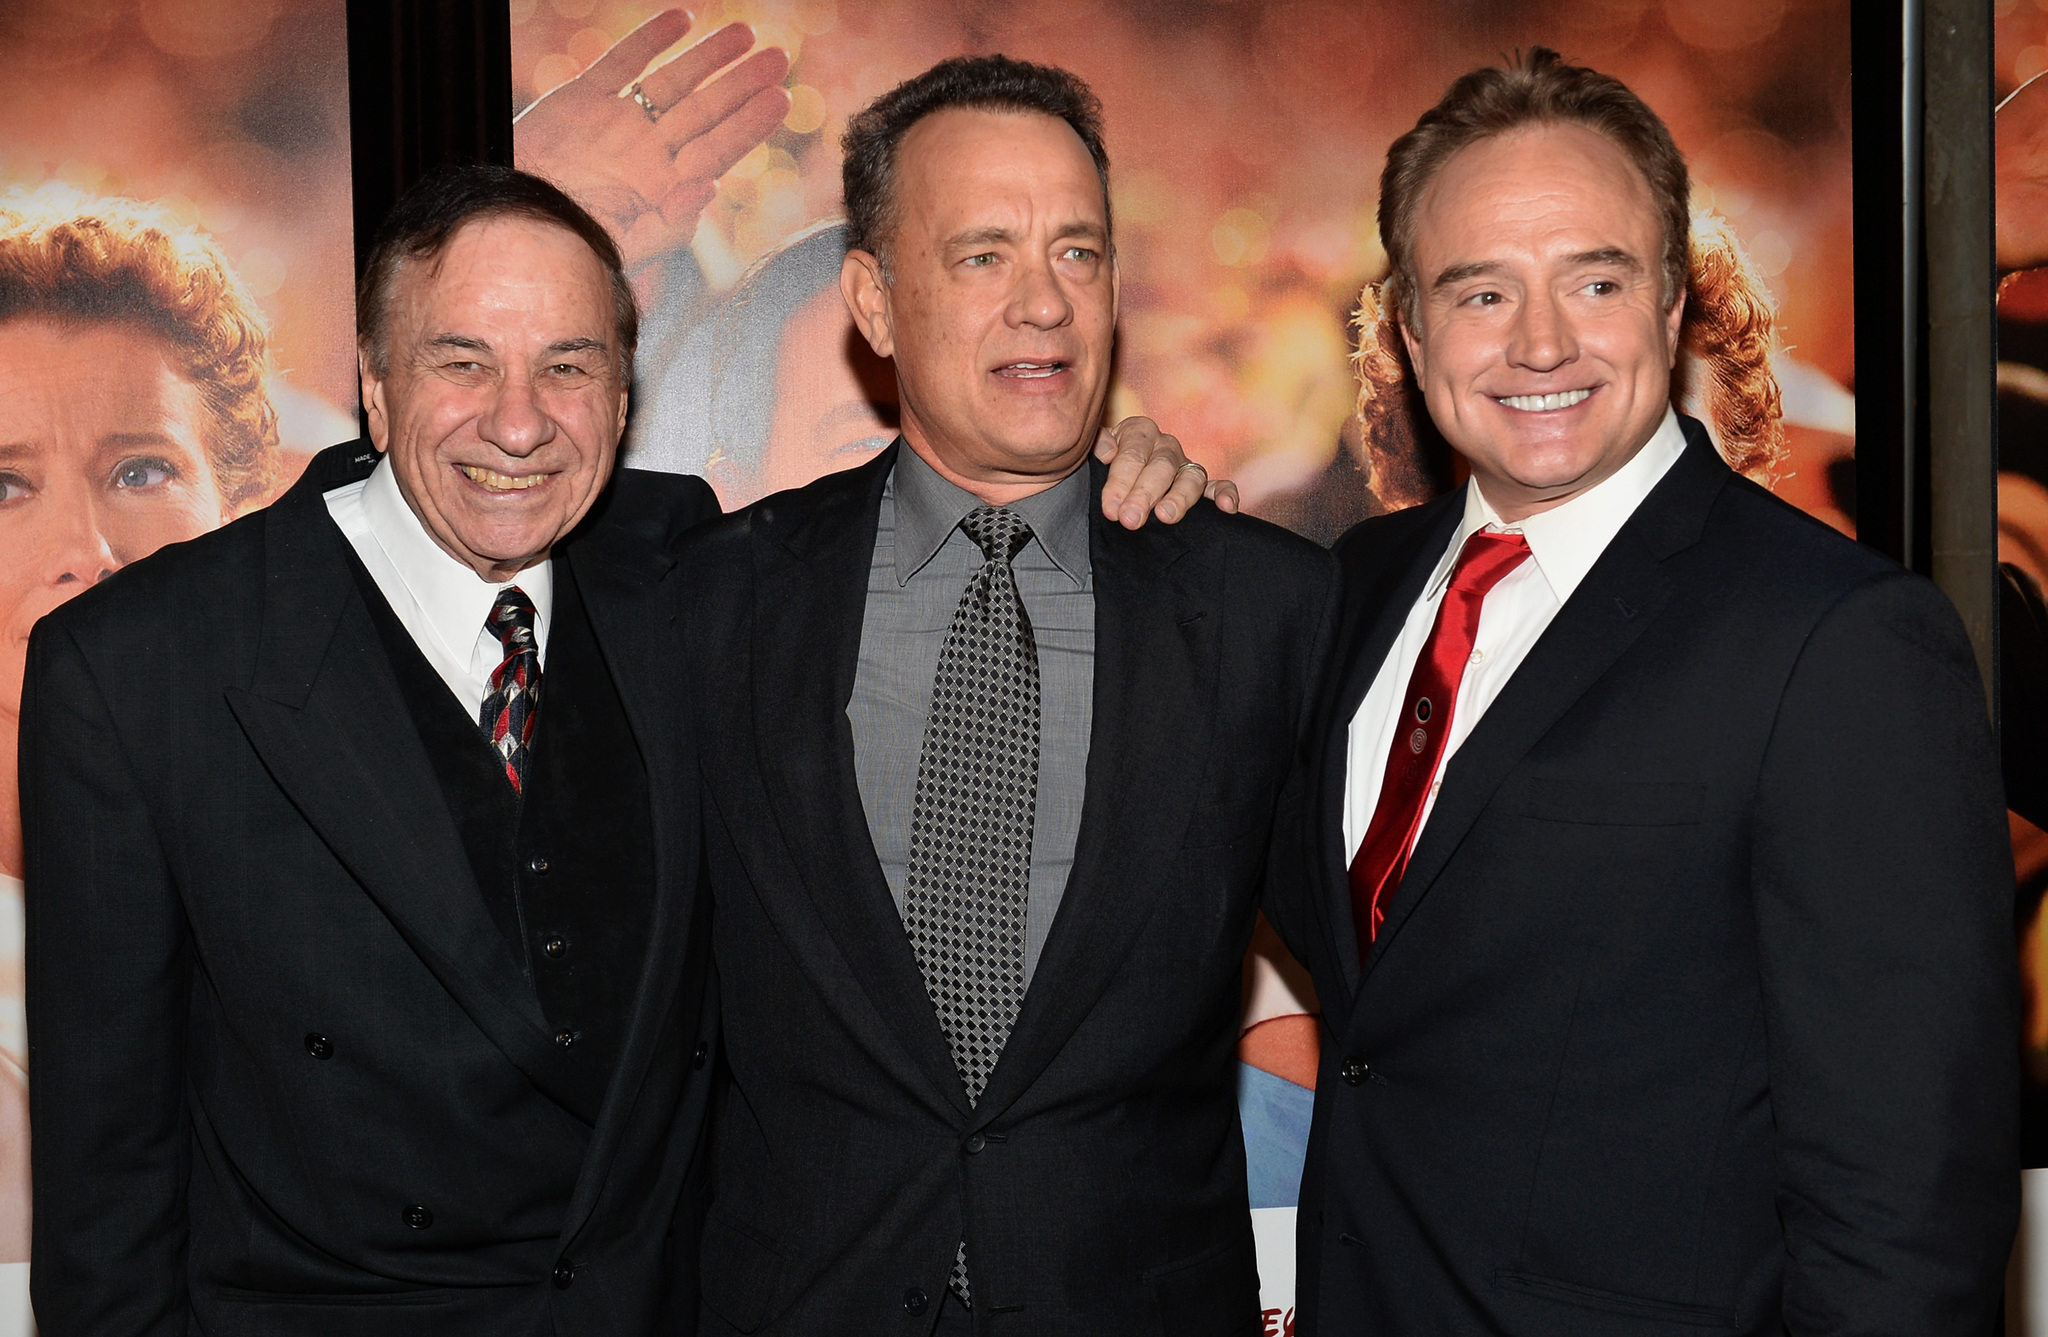 Tom Hanks, Richard Sherman and Bradley Whitford at event of Isgelbeti pona Benksa (2013)